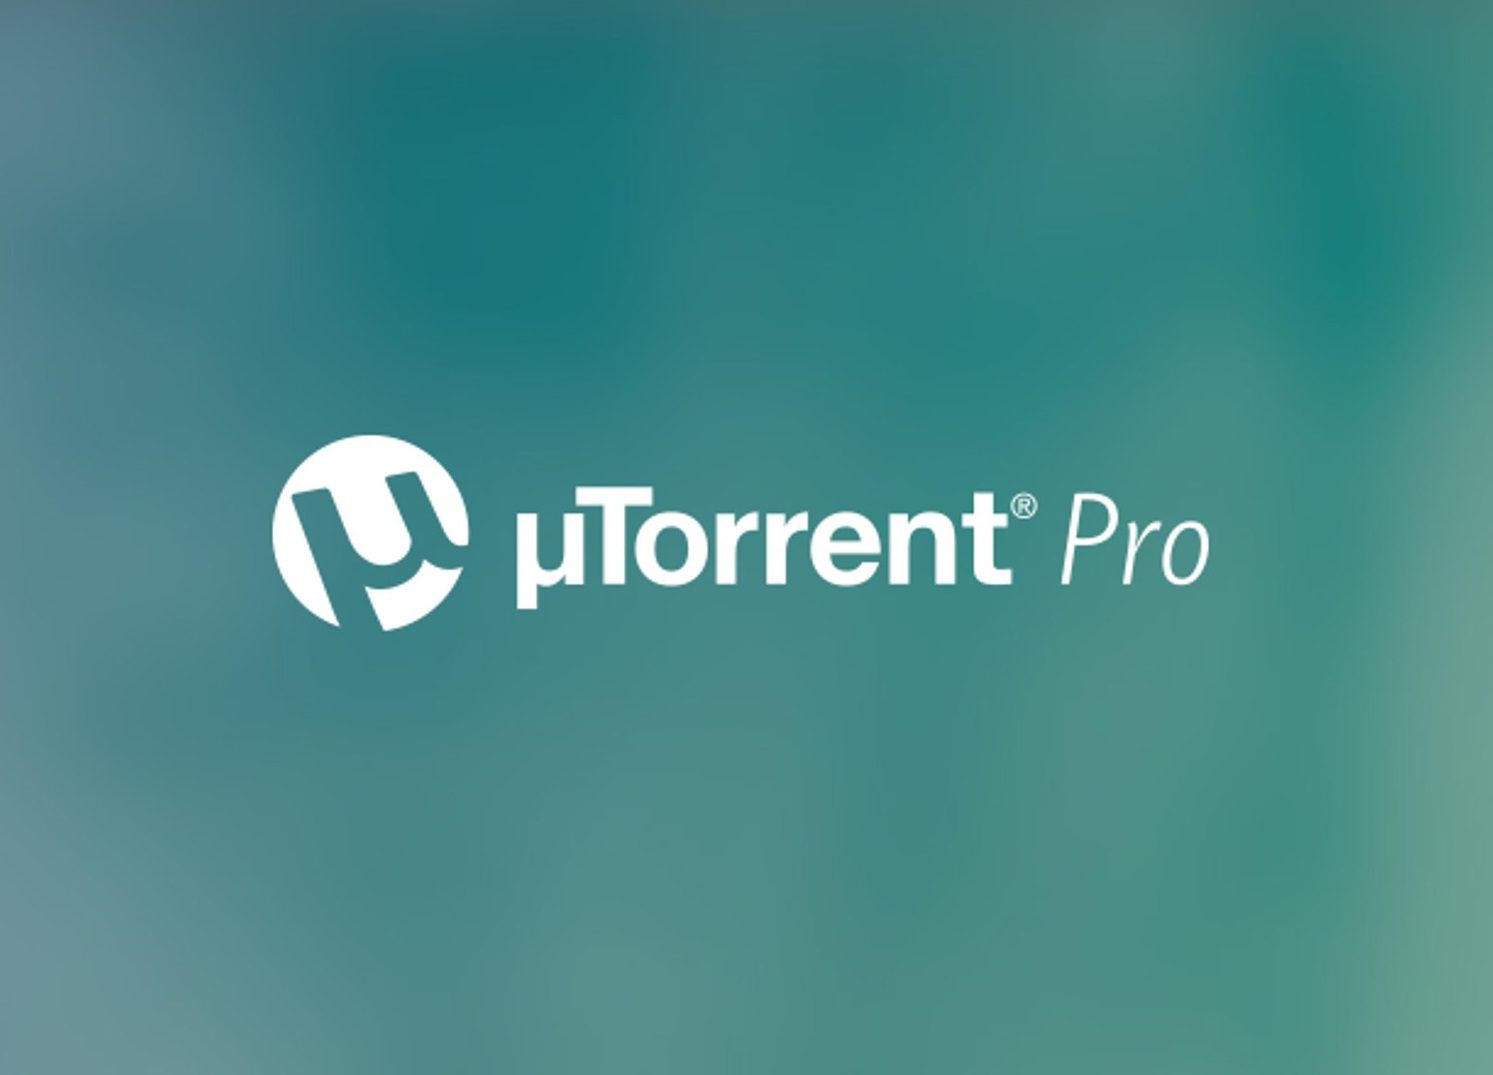 Download Utorrent Pro Crack Full Version